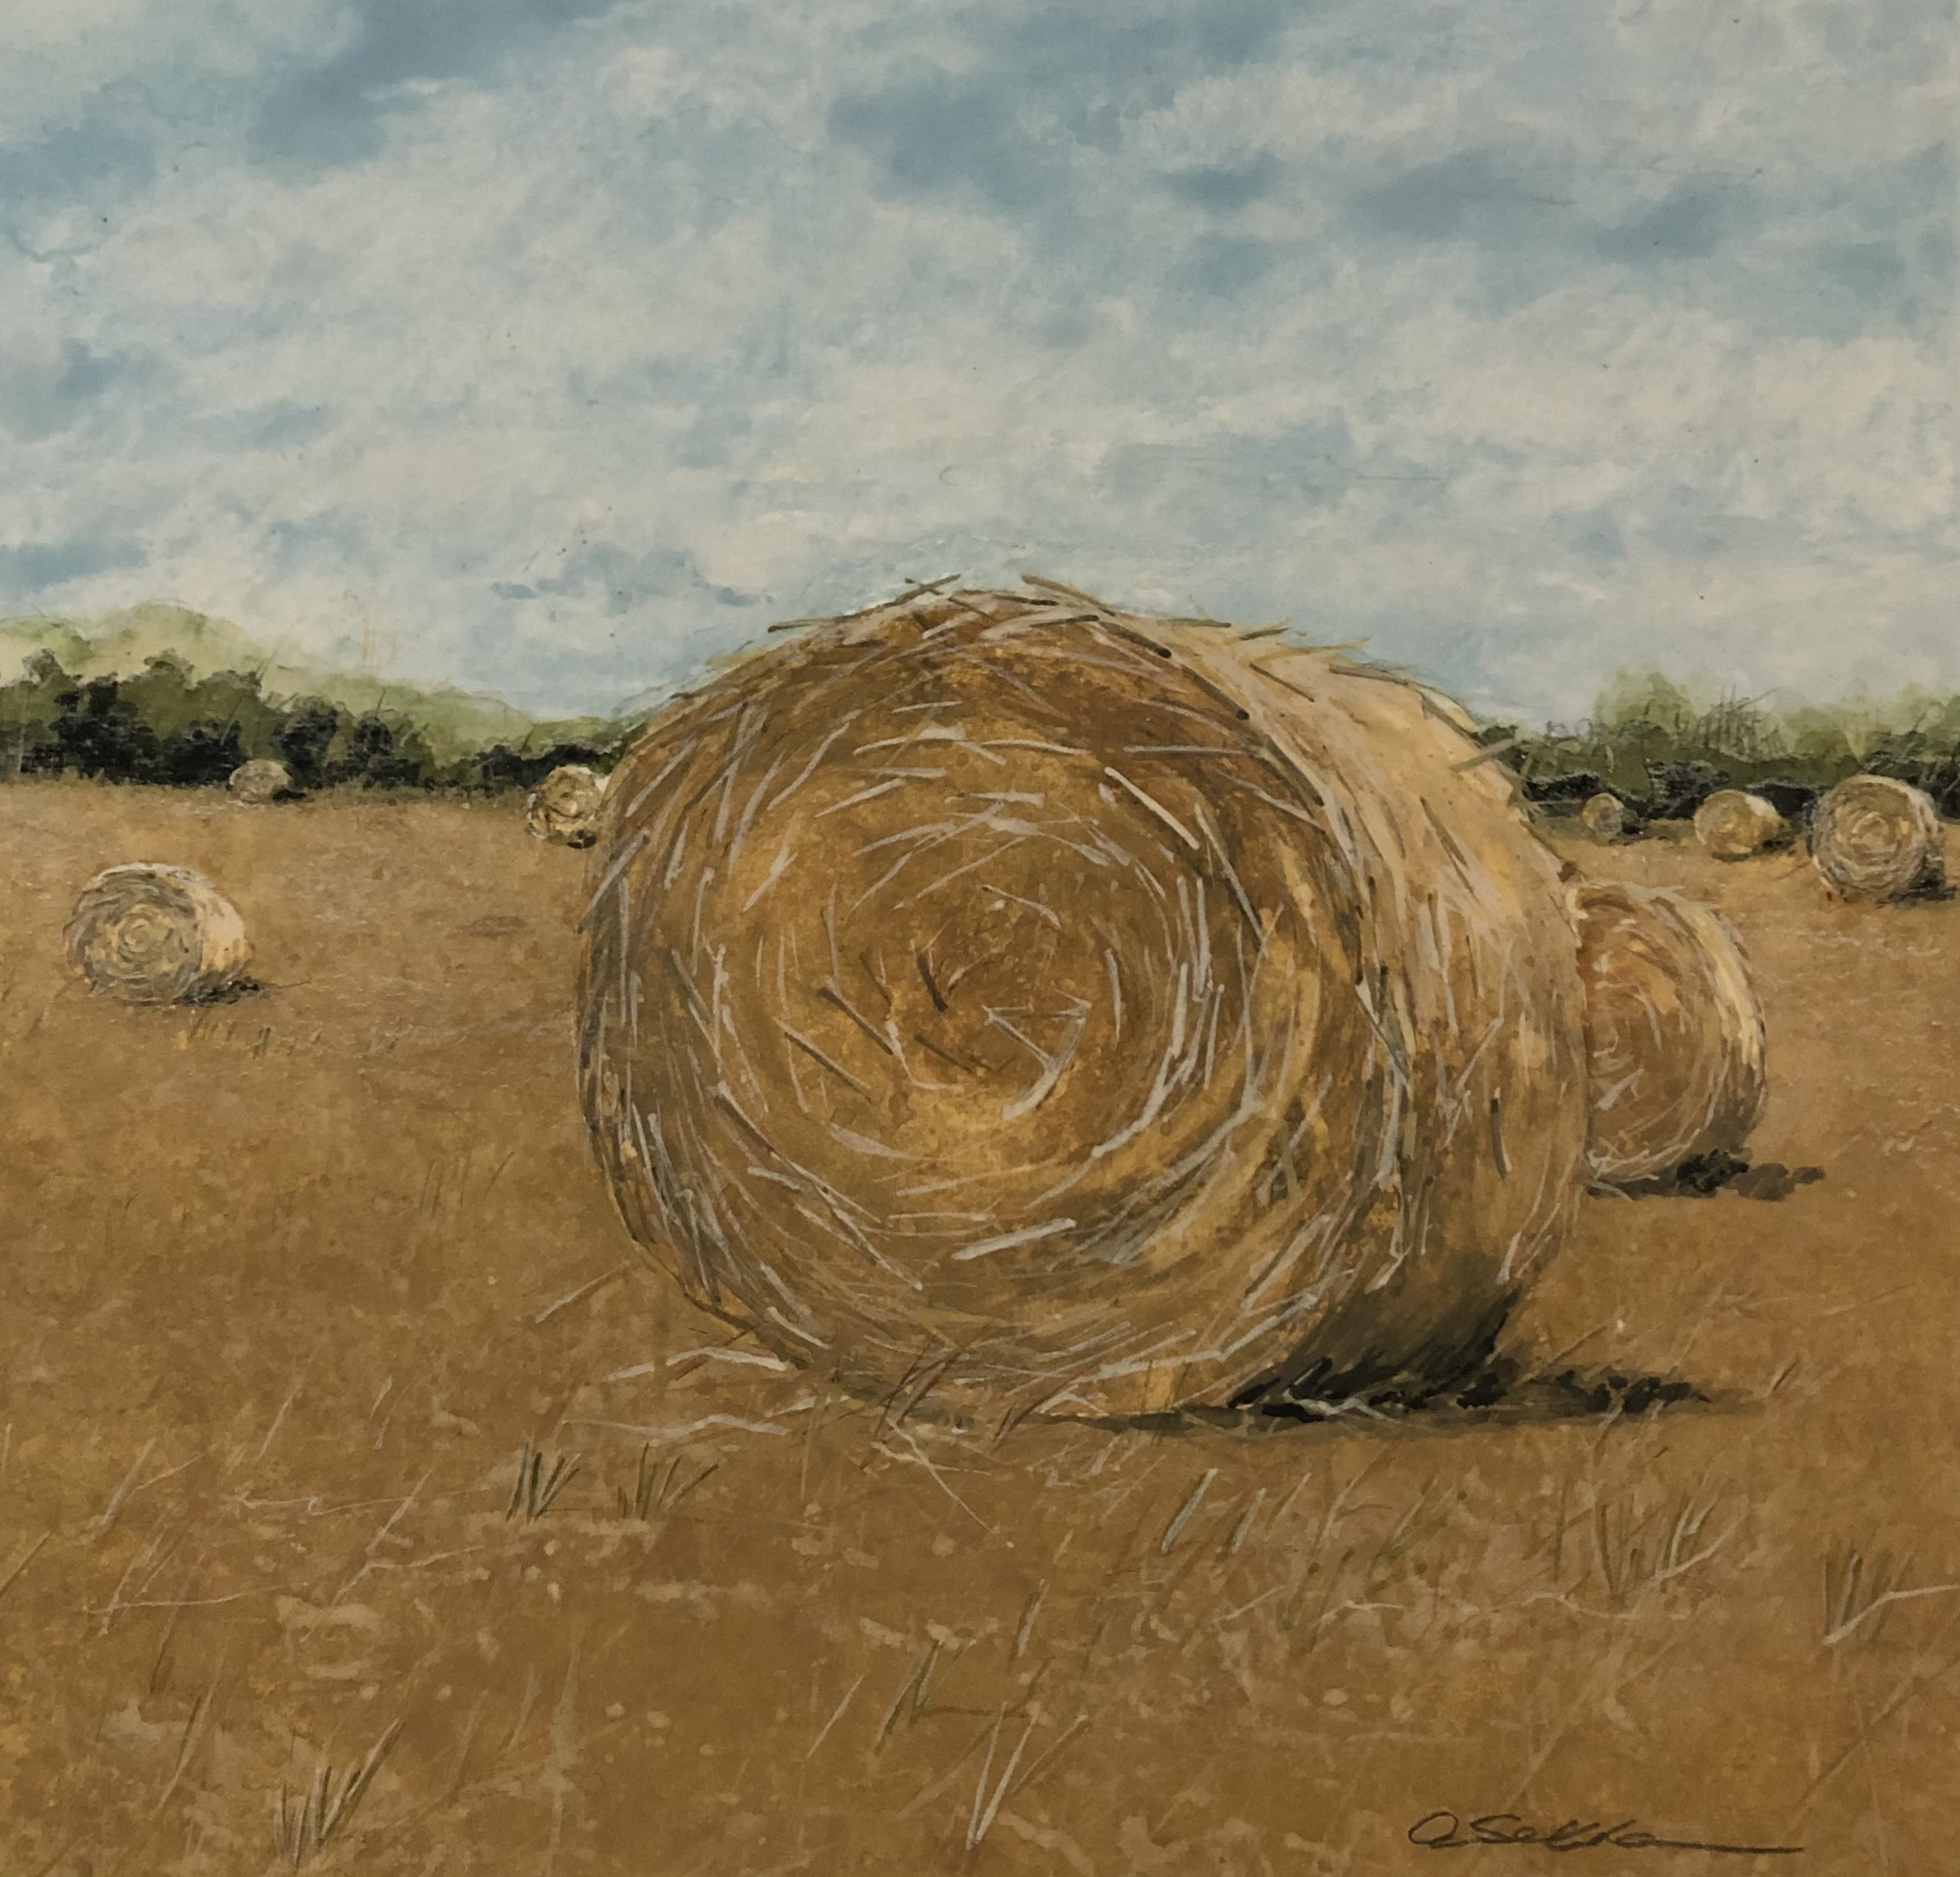 Portrait of a Hay Bale